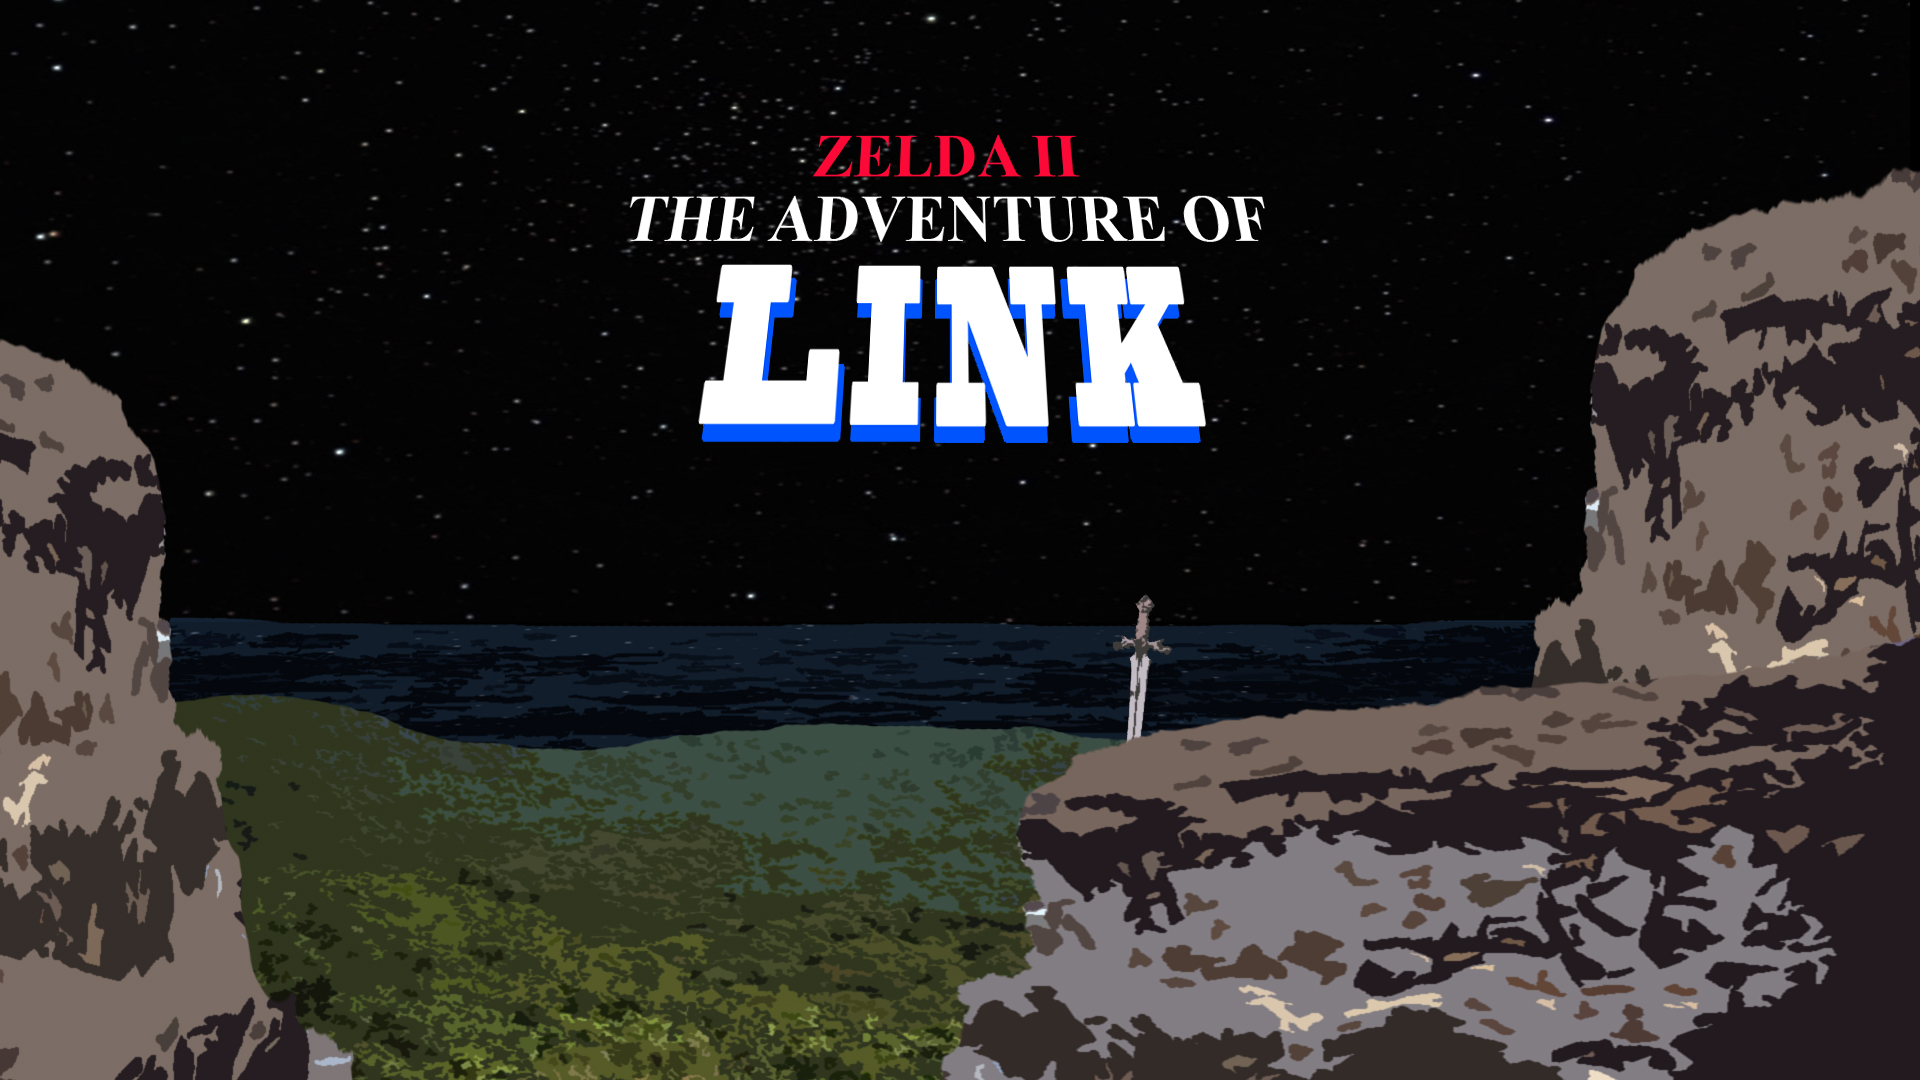 340617 Заставки і шпалери Zelda Ii: The Adventure Of Link на телефон. Завантажити  картинки безкоштовно